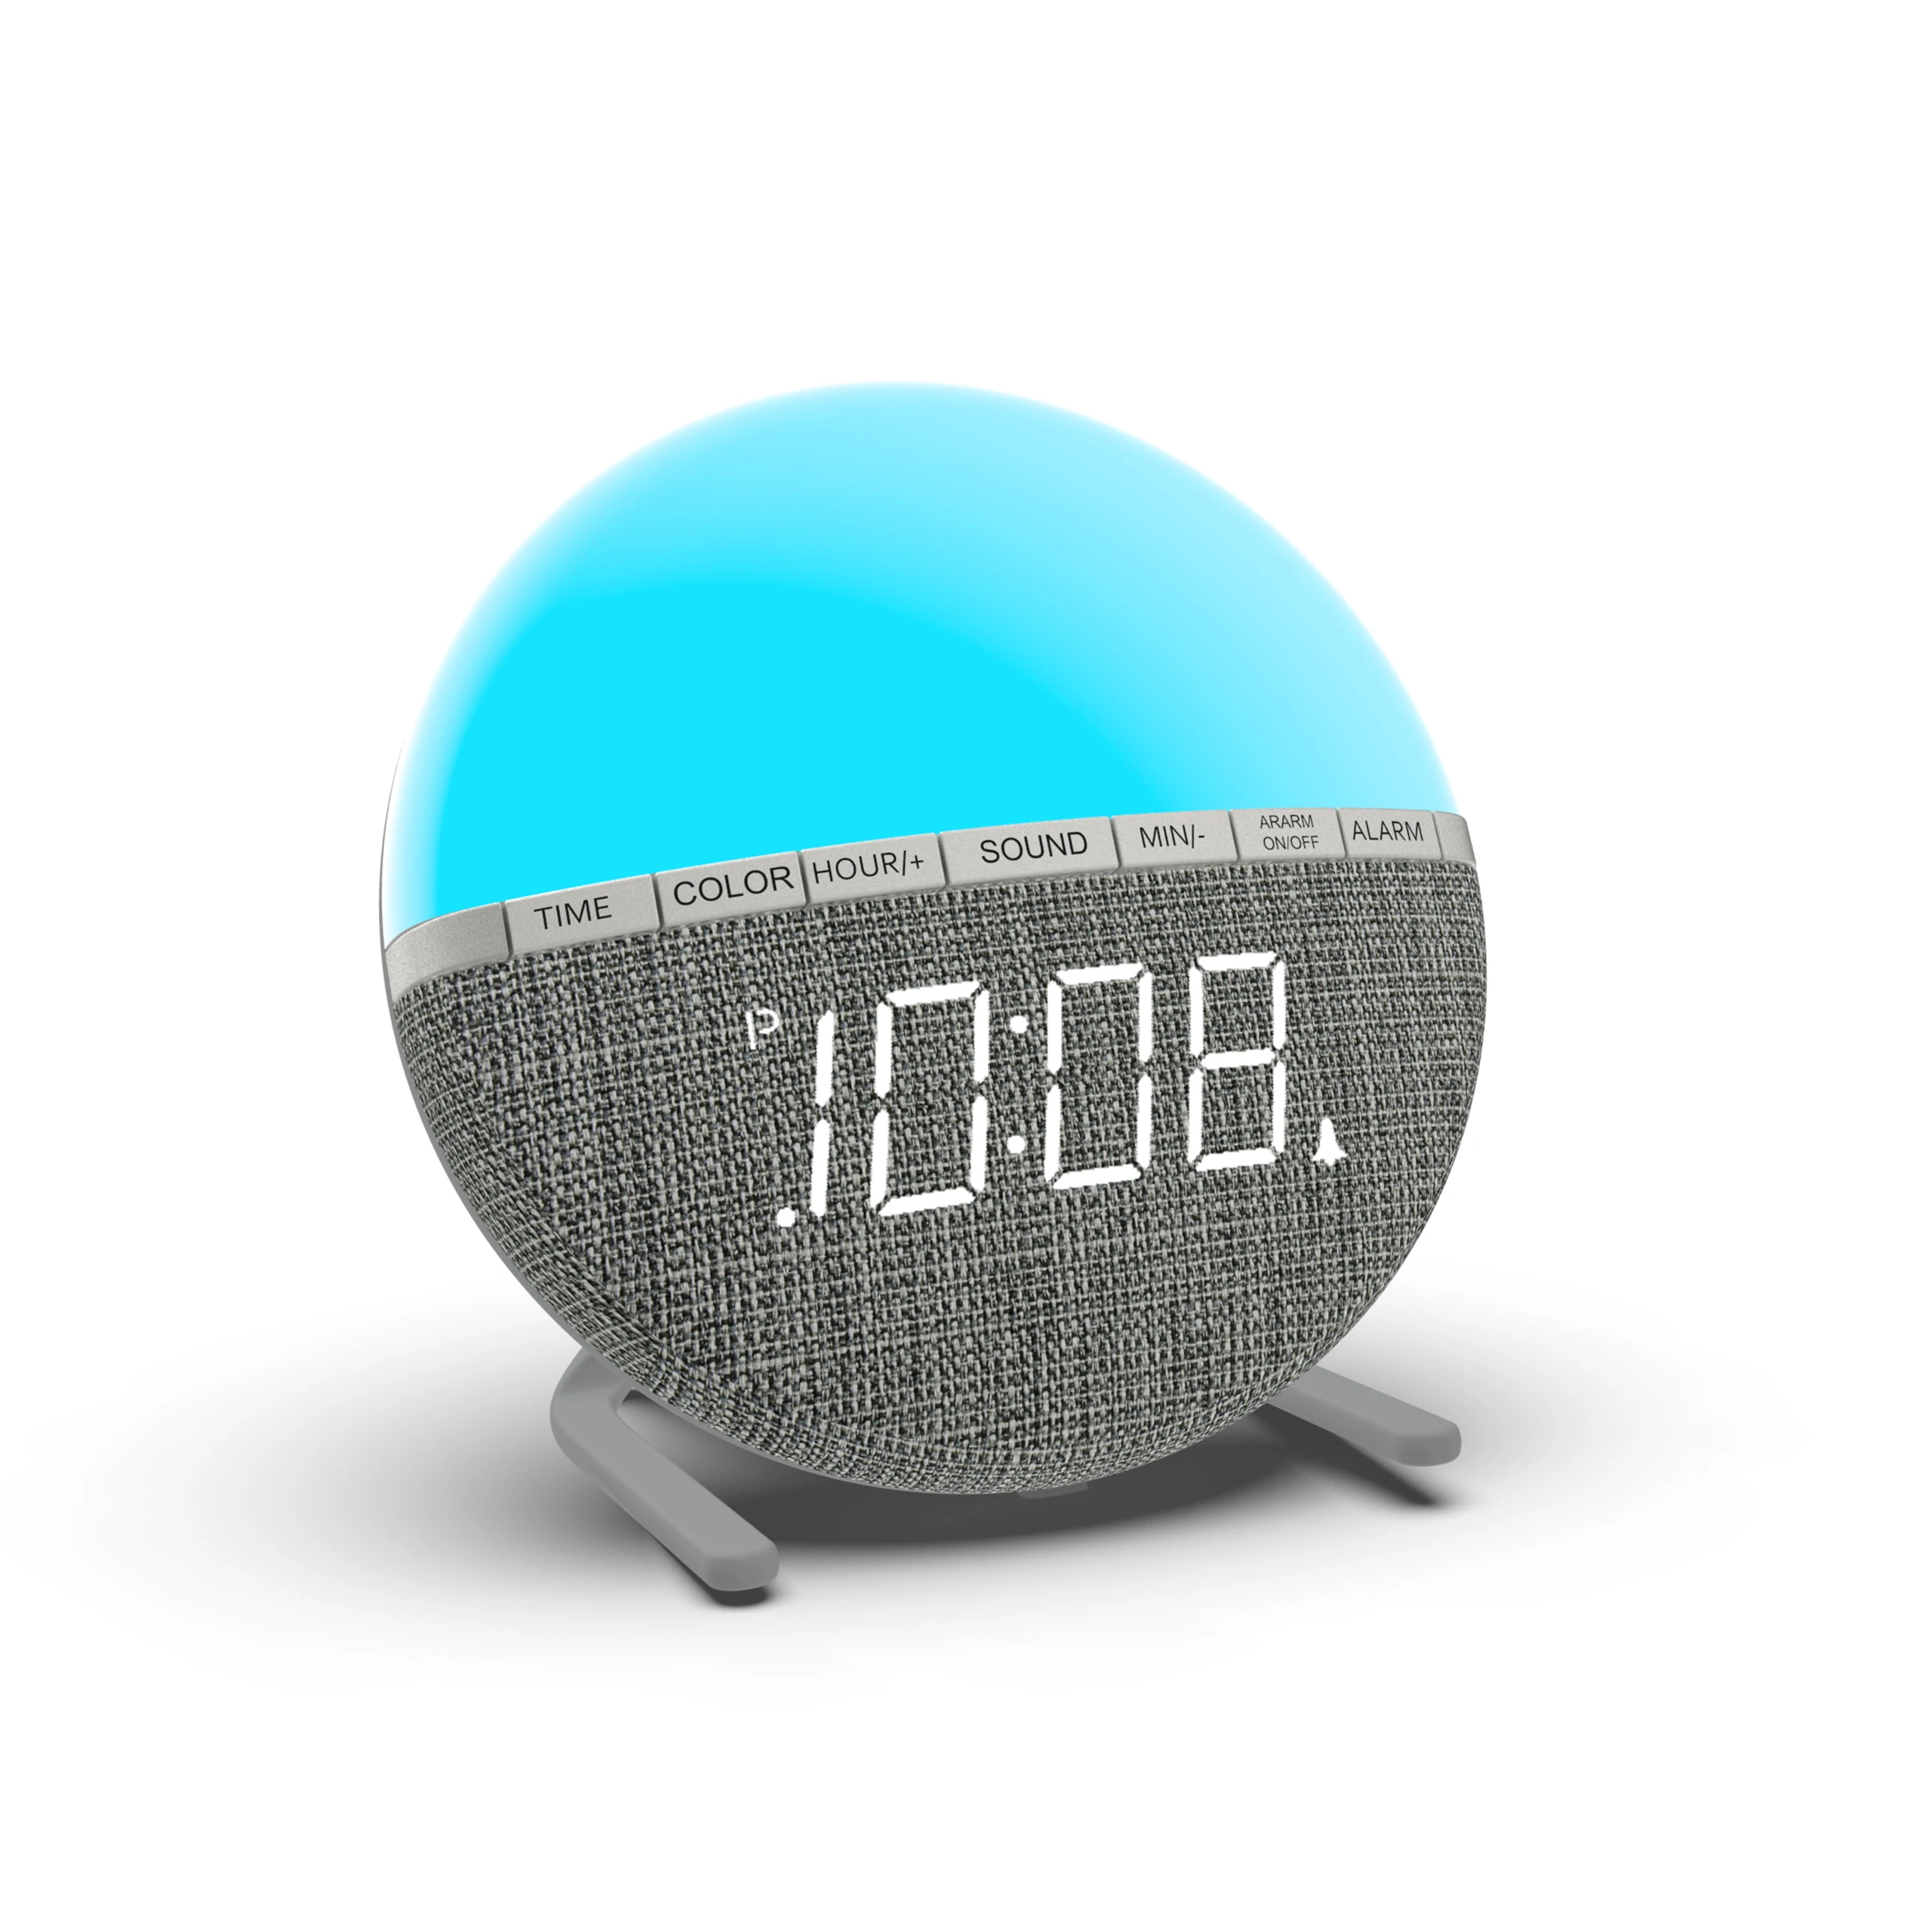 

Hot Best Desktop Round Snooze Alarm Clock Function Small Digital Clock Display Led Light, Custom color